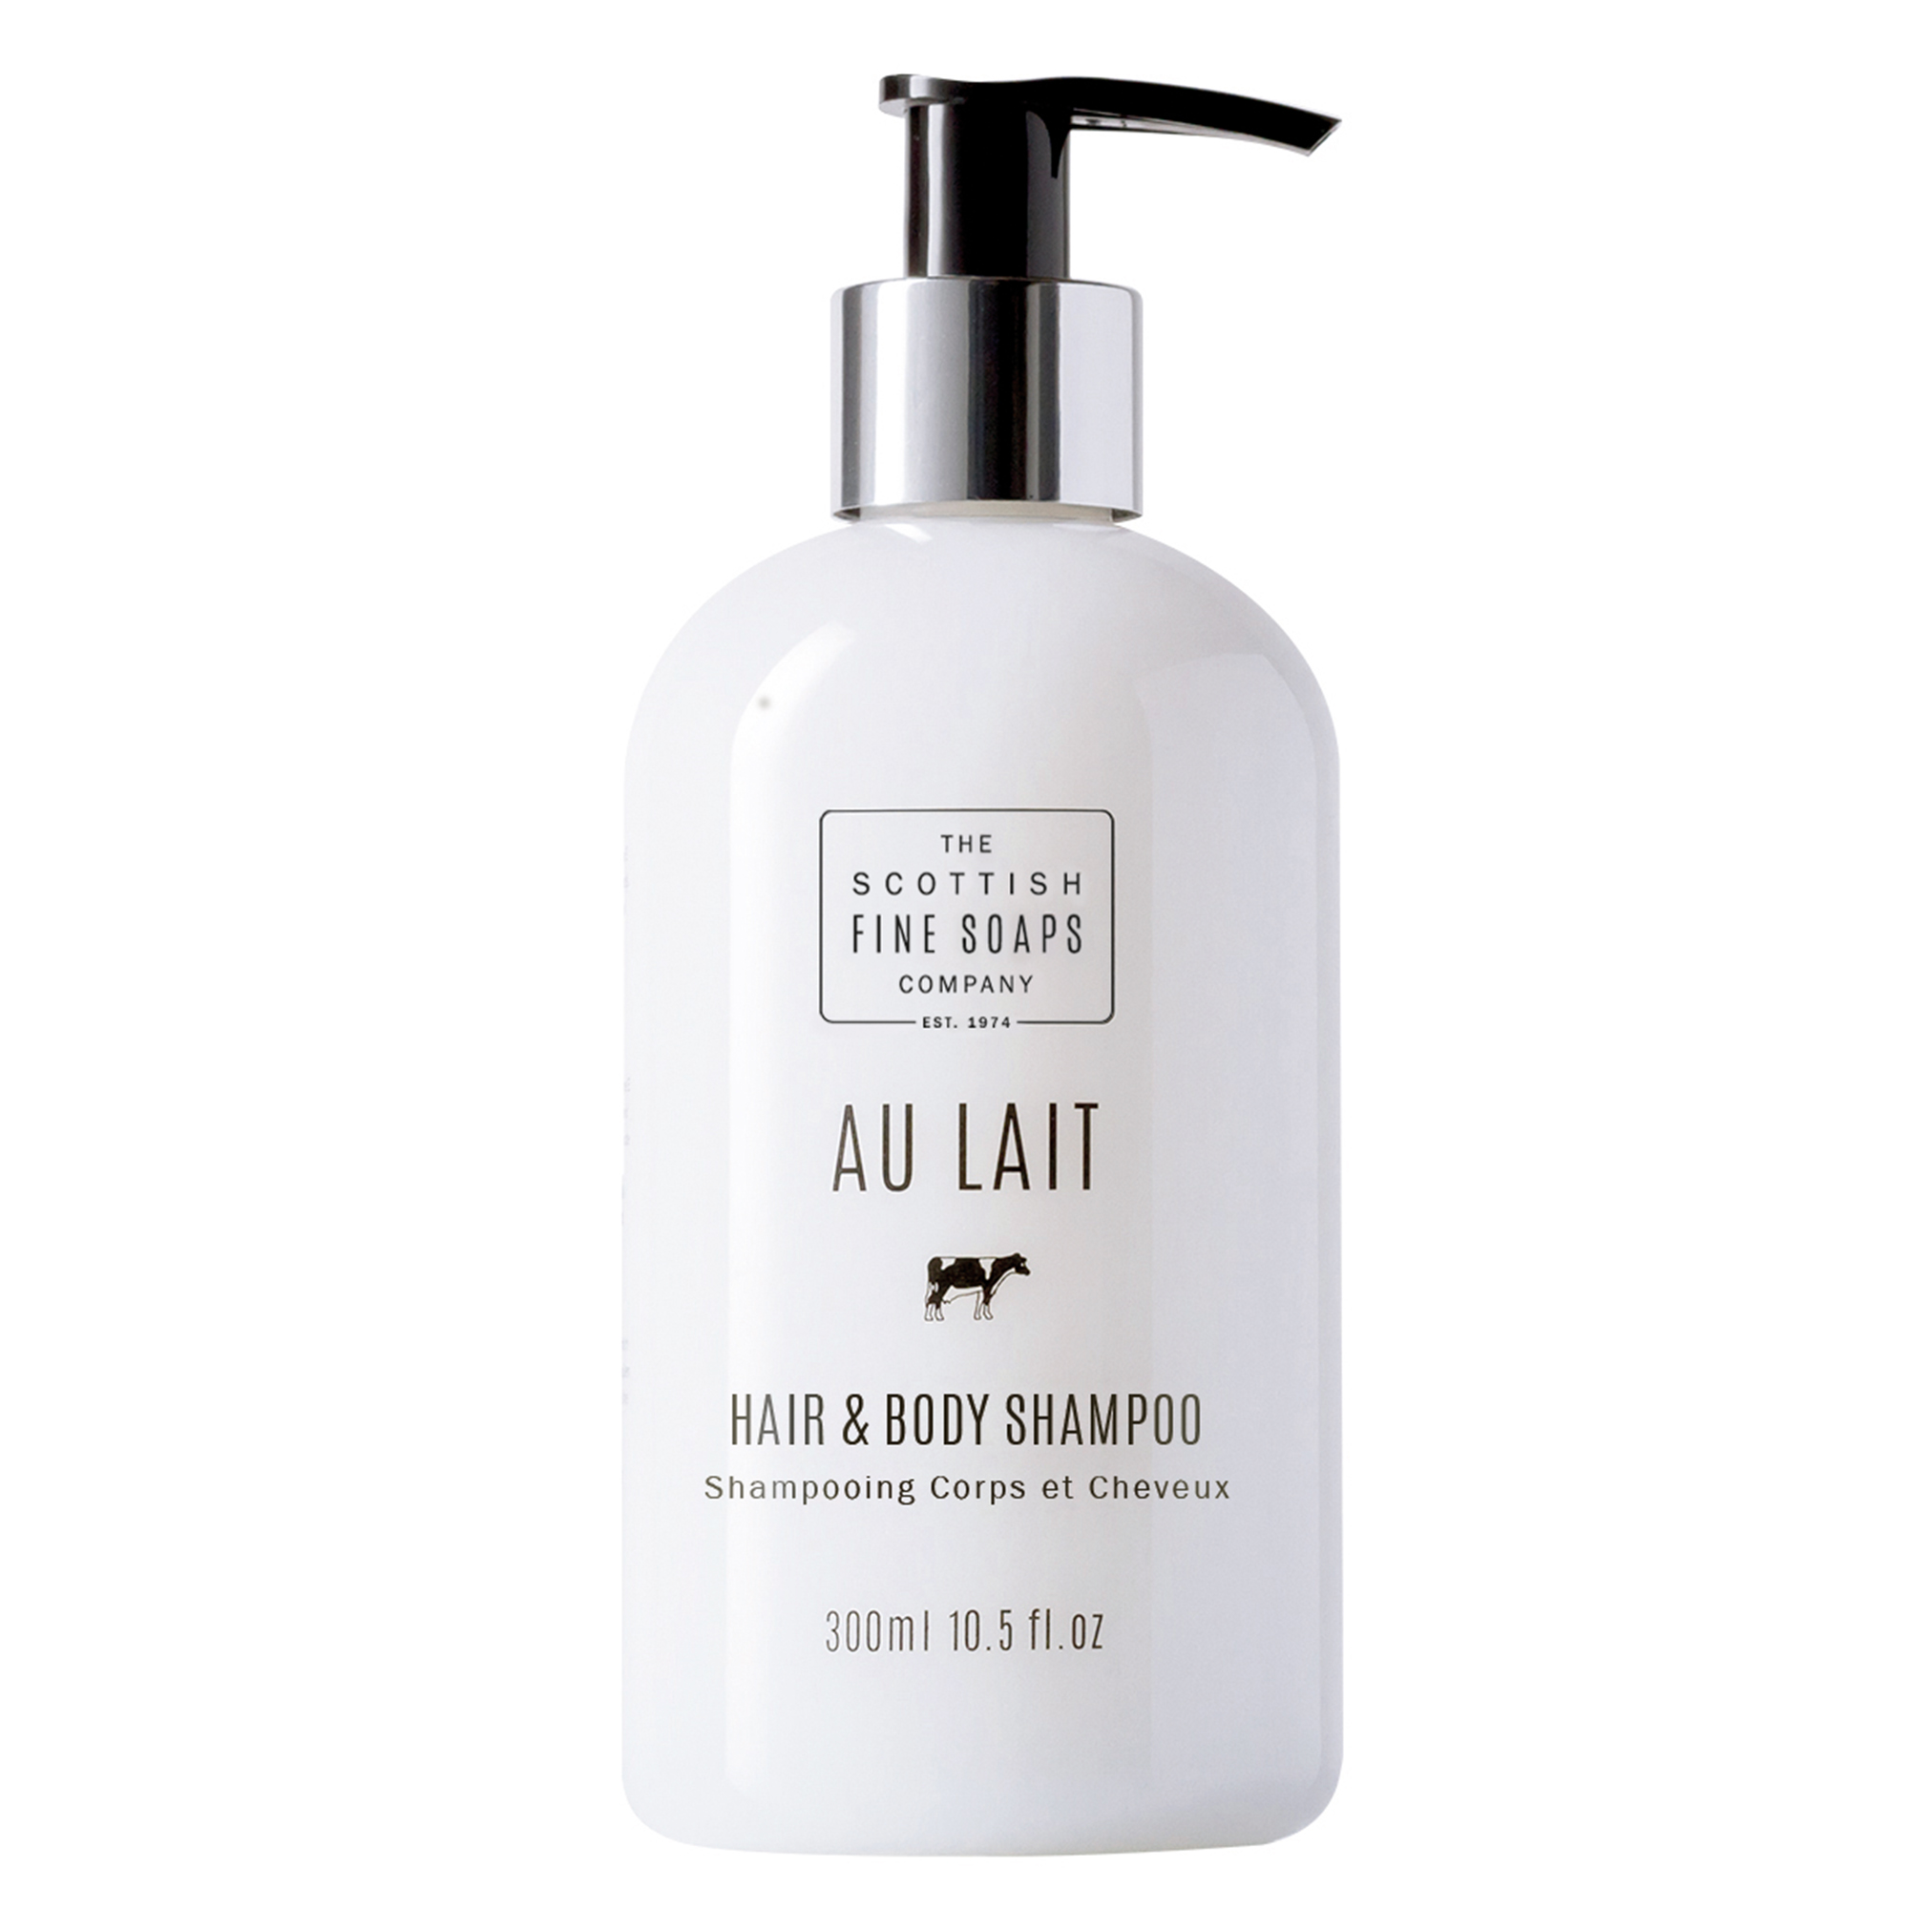 SCOTTISH FINE SOAPS AU LAIT Hair & Body Shampoo 300ml / Pumpspender 